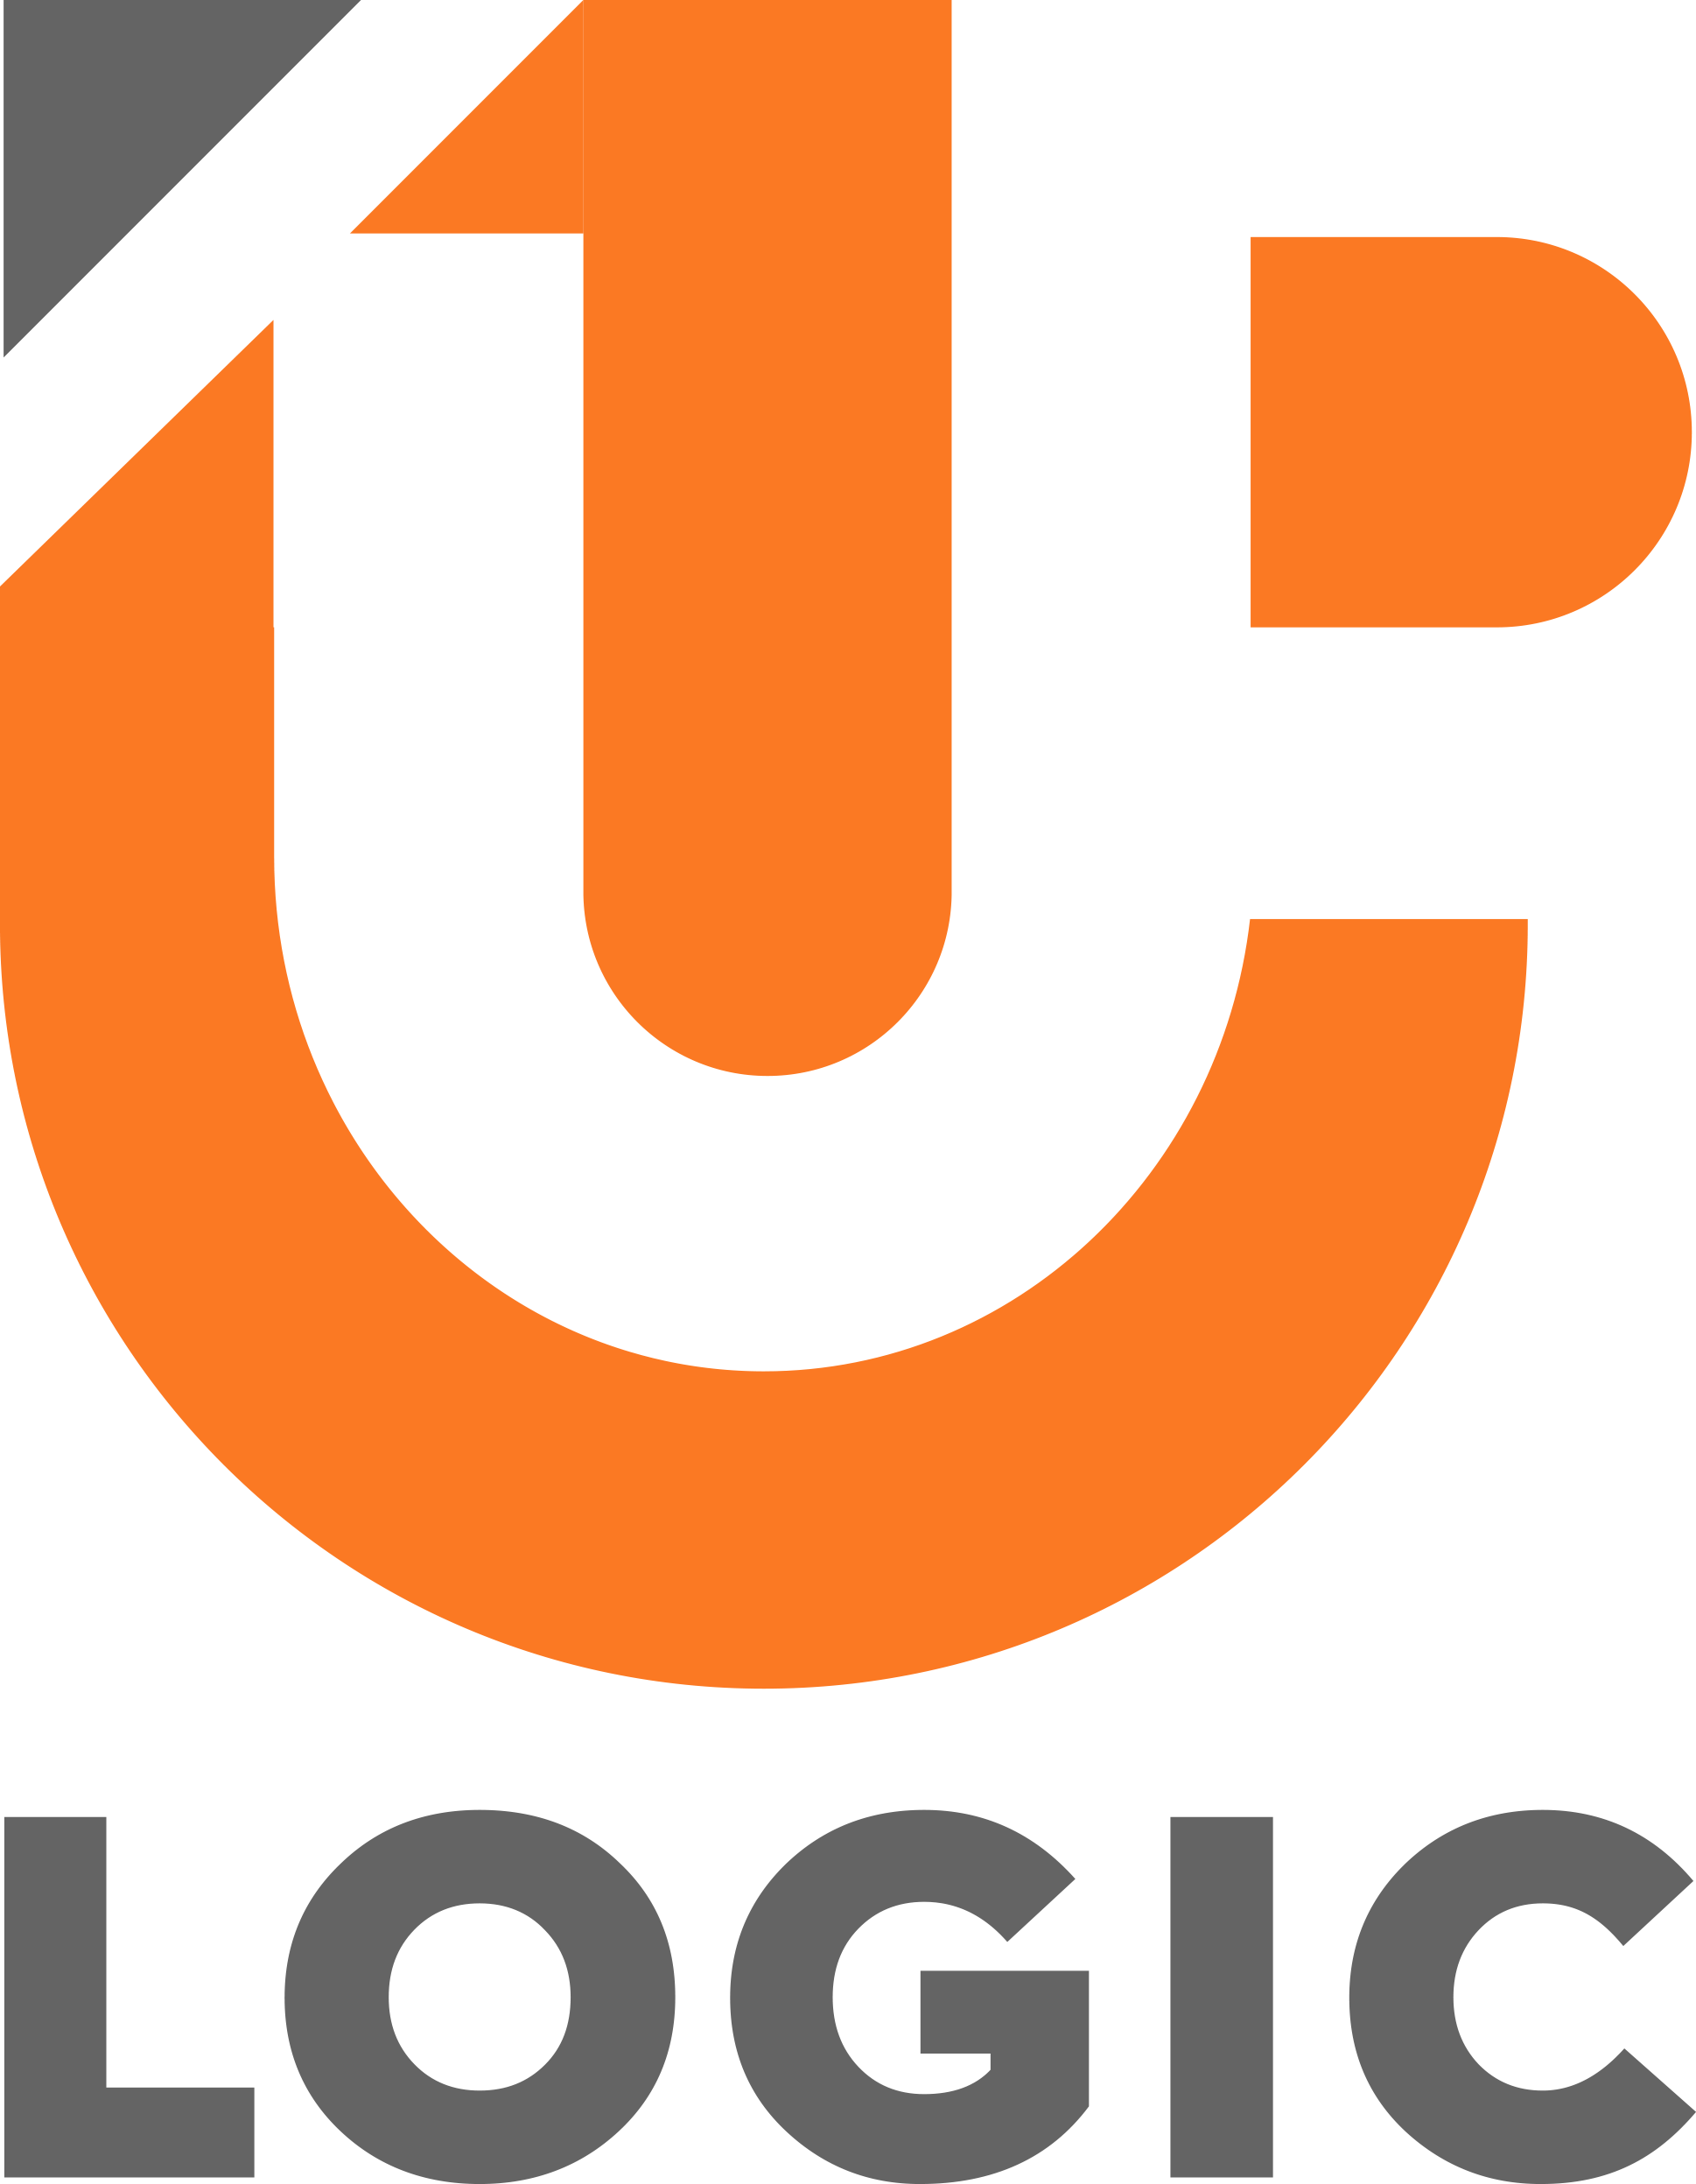 Uplogic Technologies